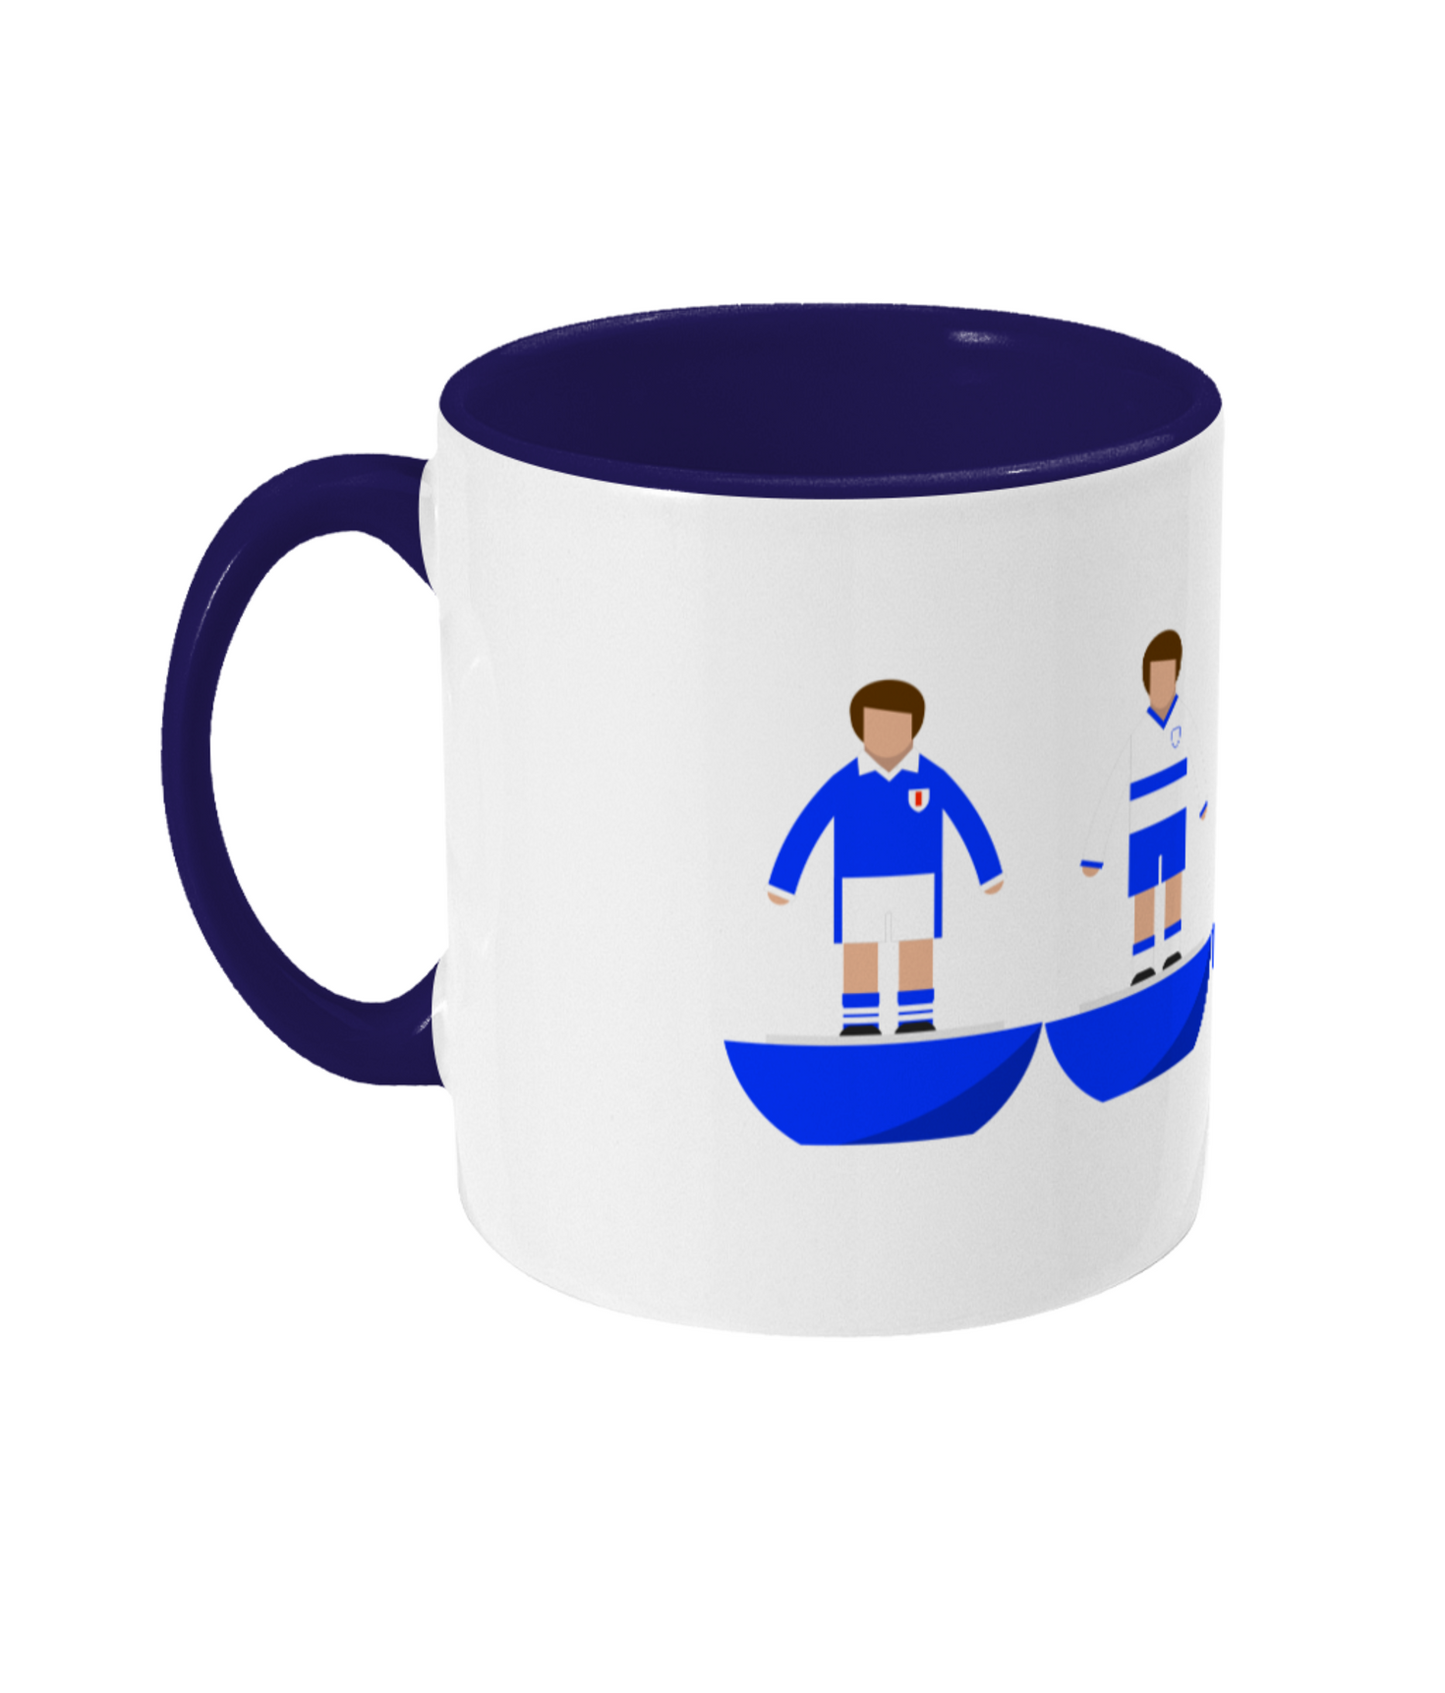 Football Kits 'Millwall combined' Mug